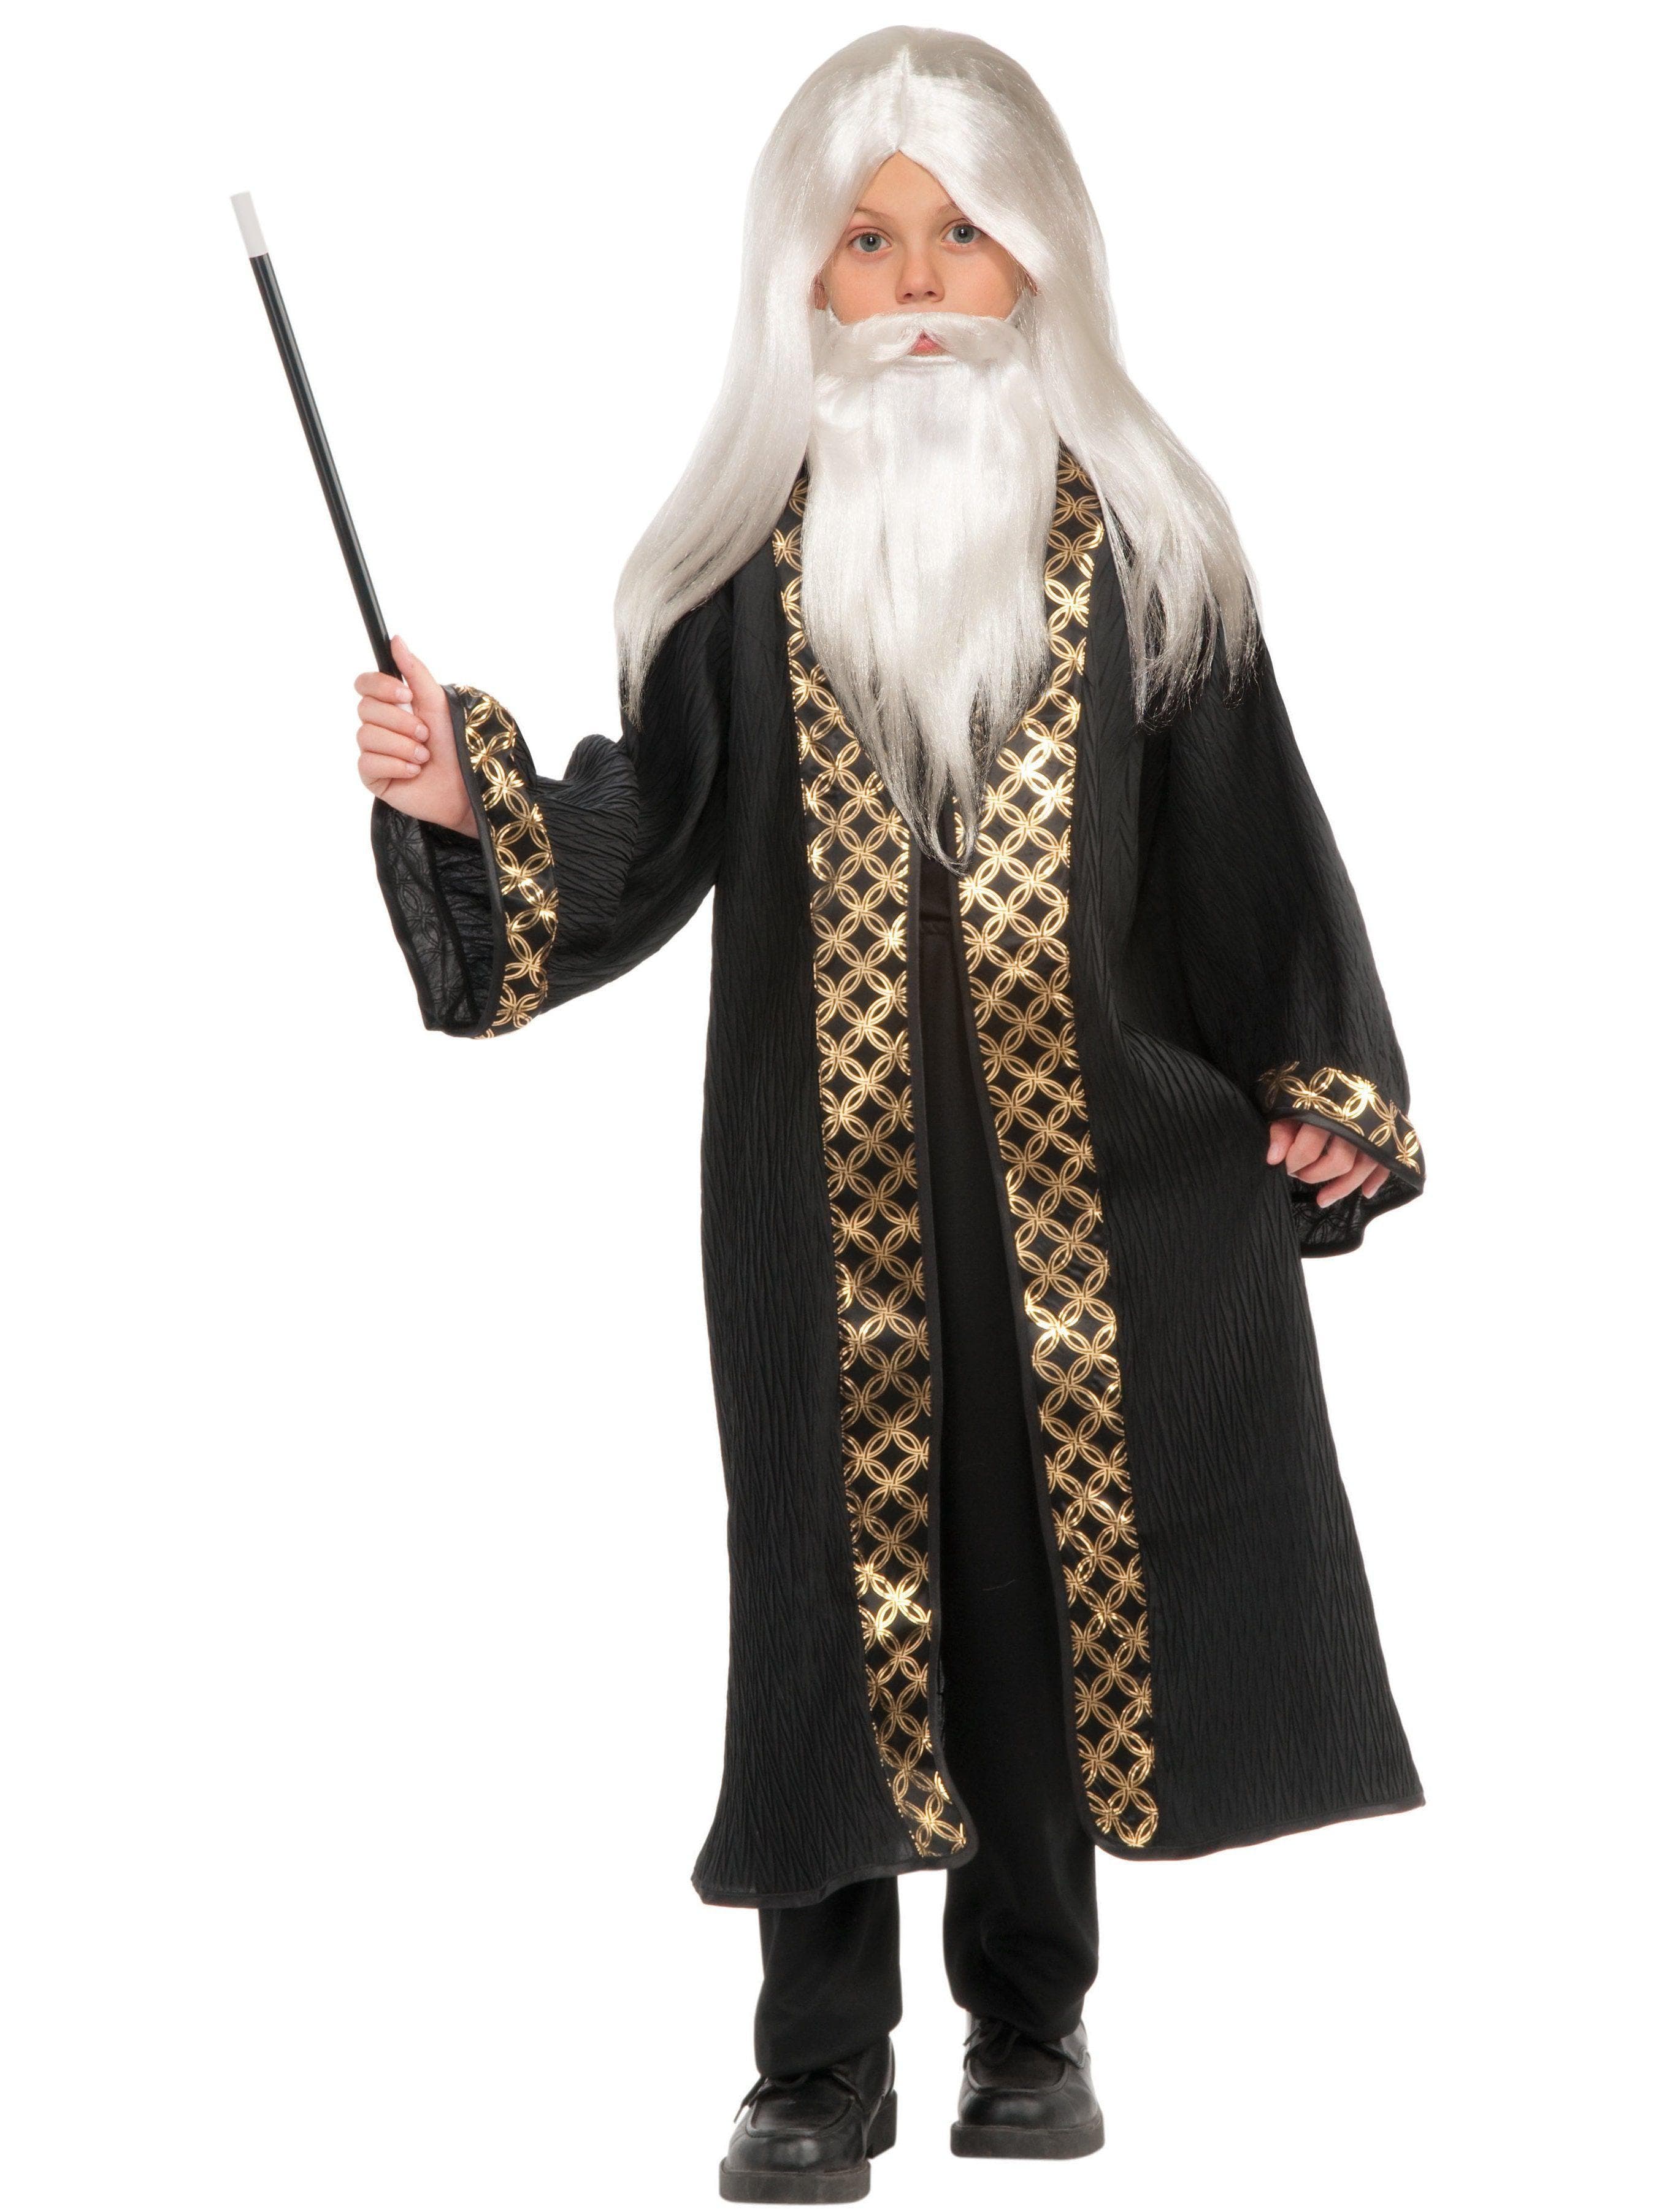 Boys' White Wizard Wig and Beard Set - costumes.com